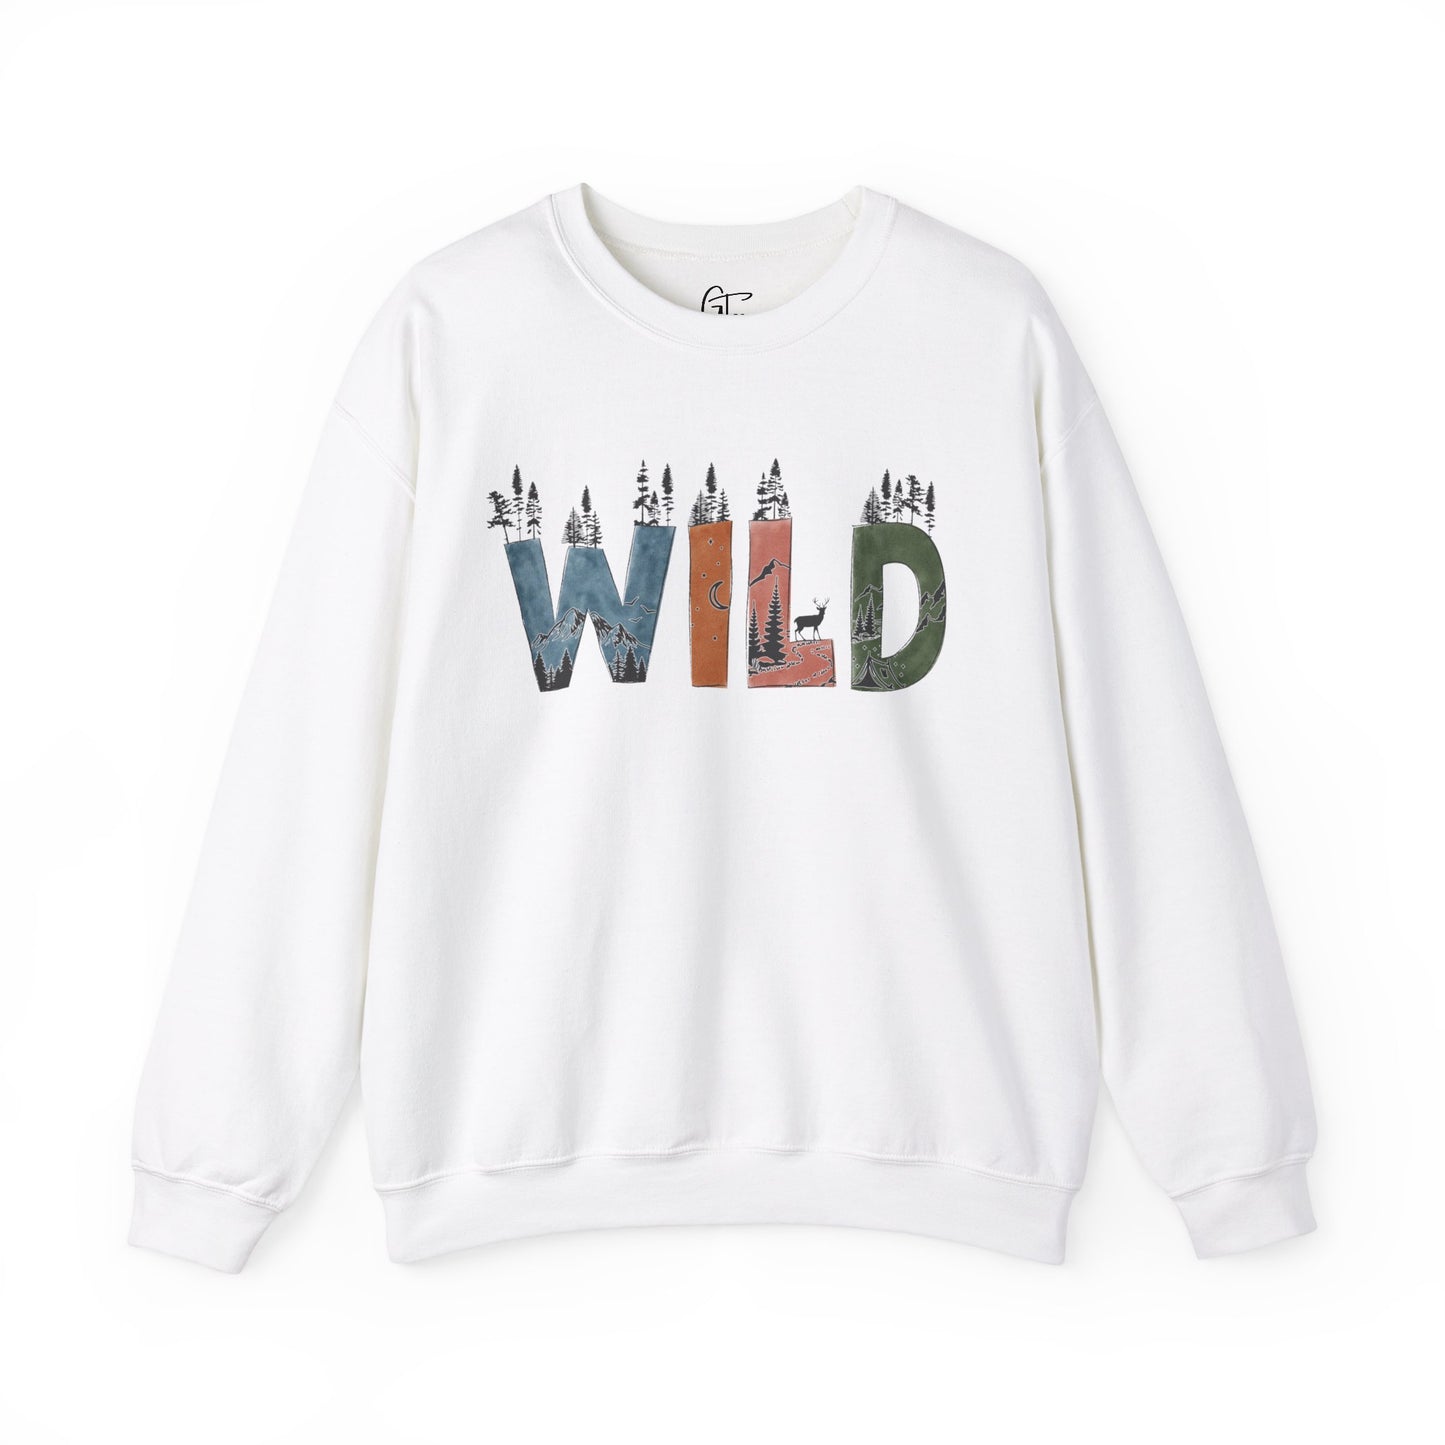 Campin in the Wild Sweatshirt